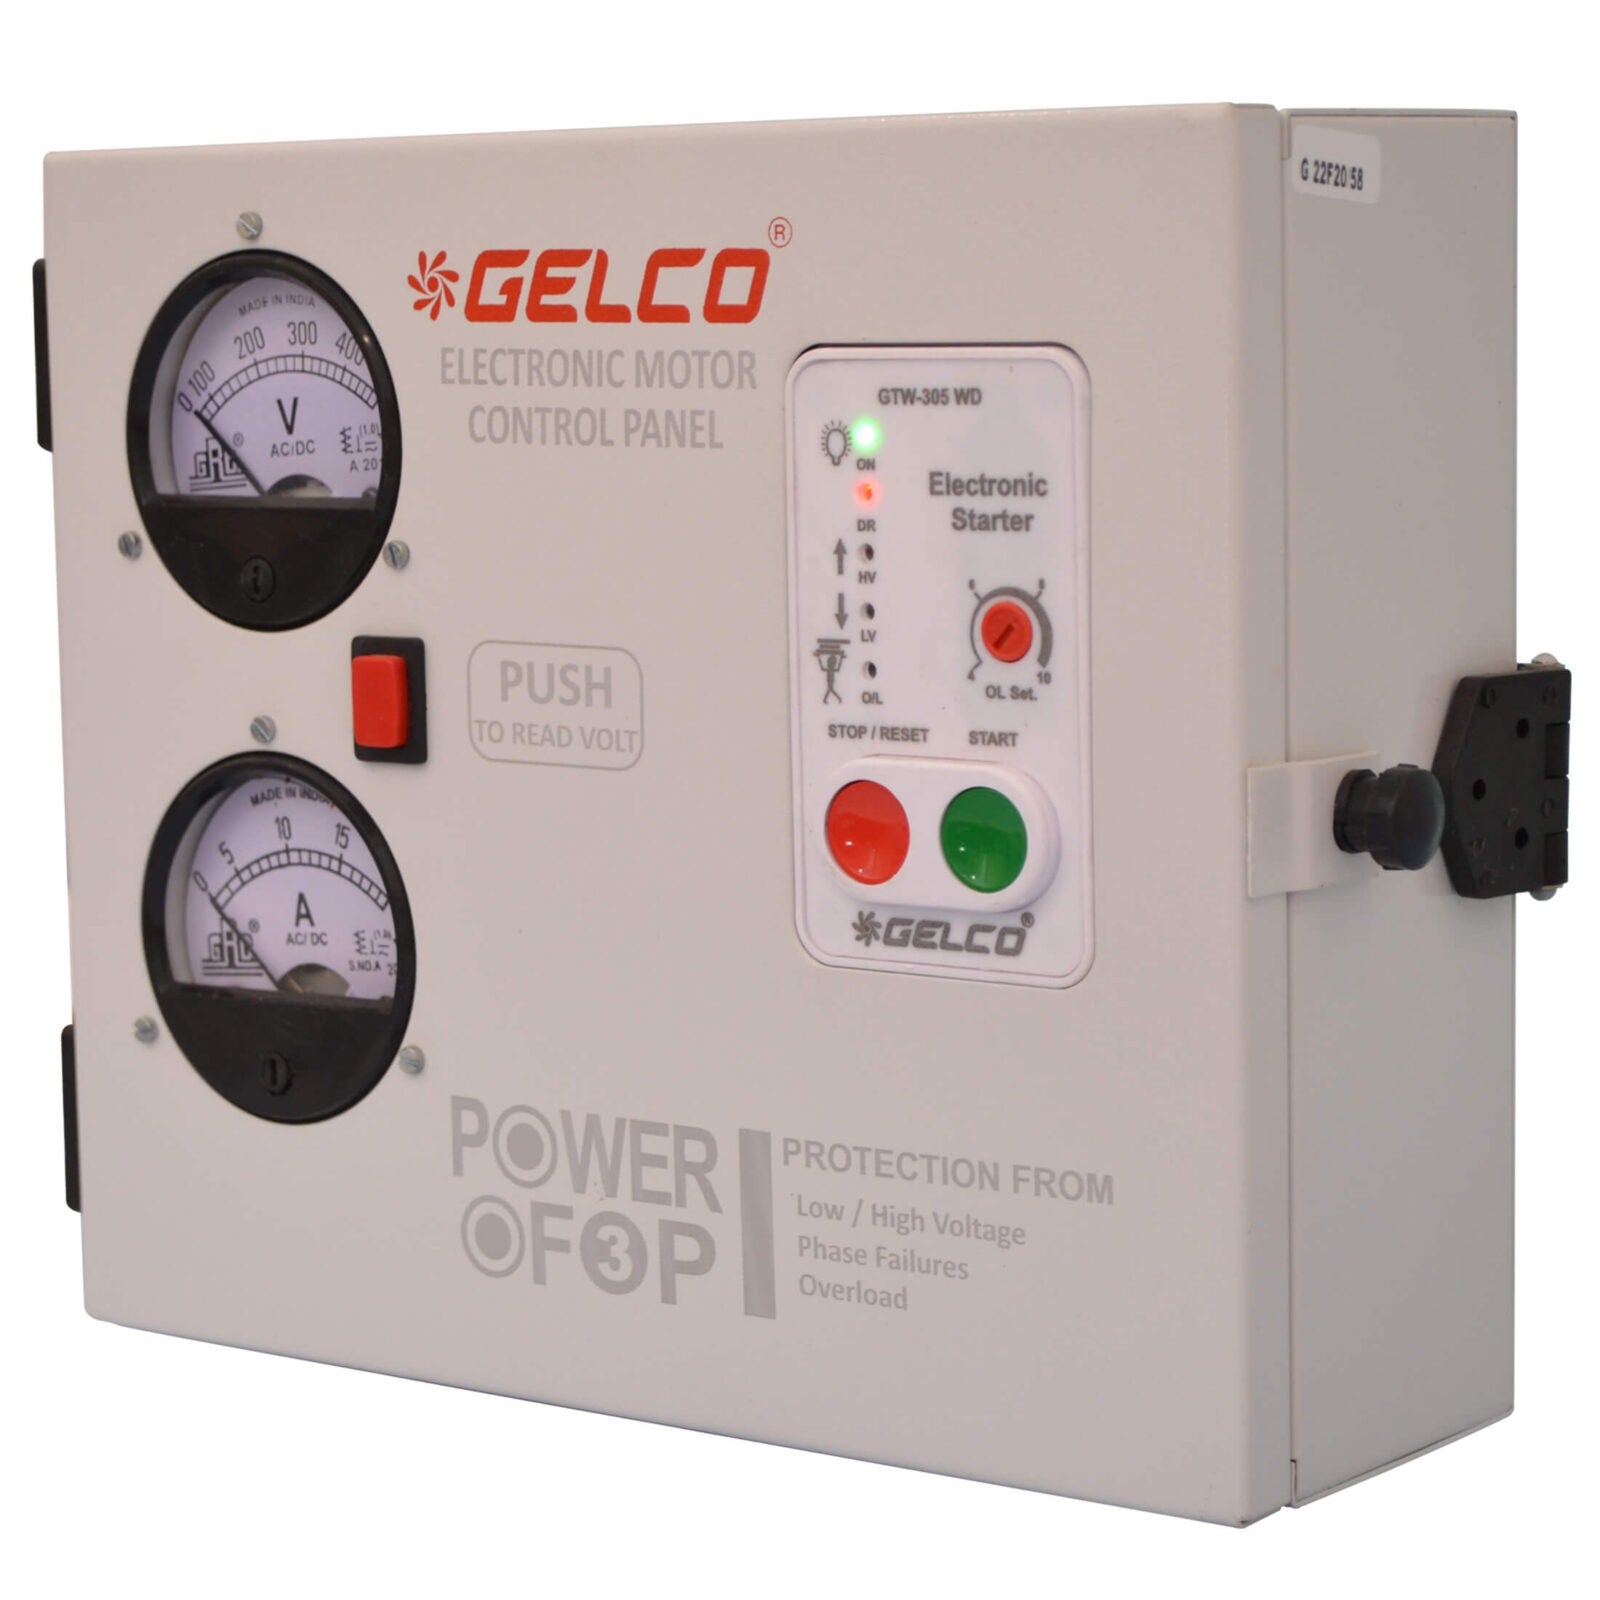 GTW WD - Gelco Electronics Pvt. Ltd.